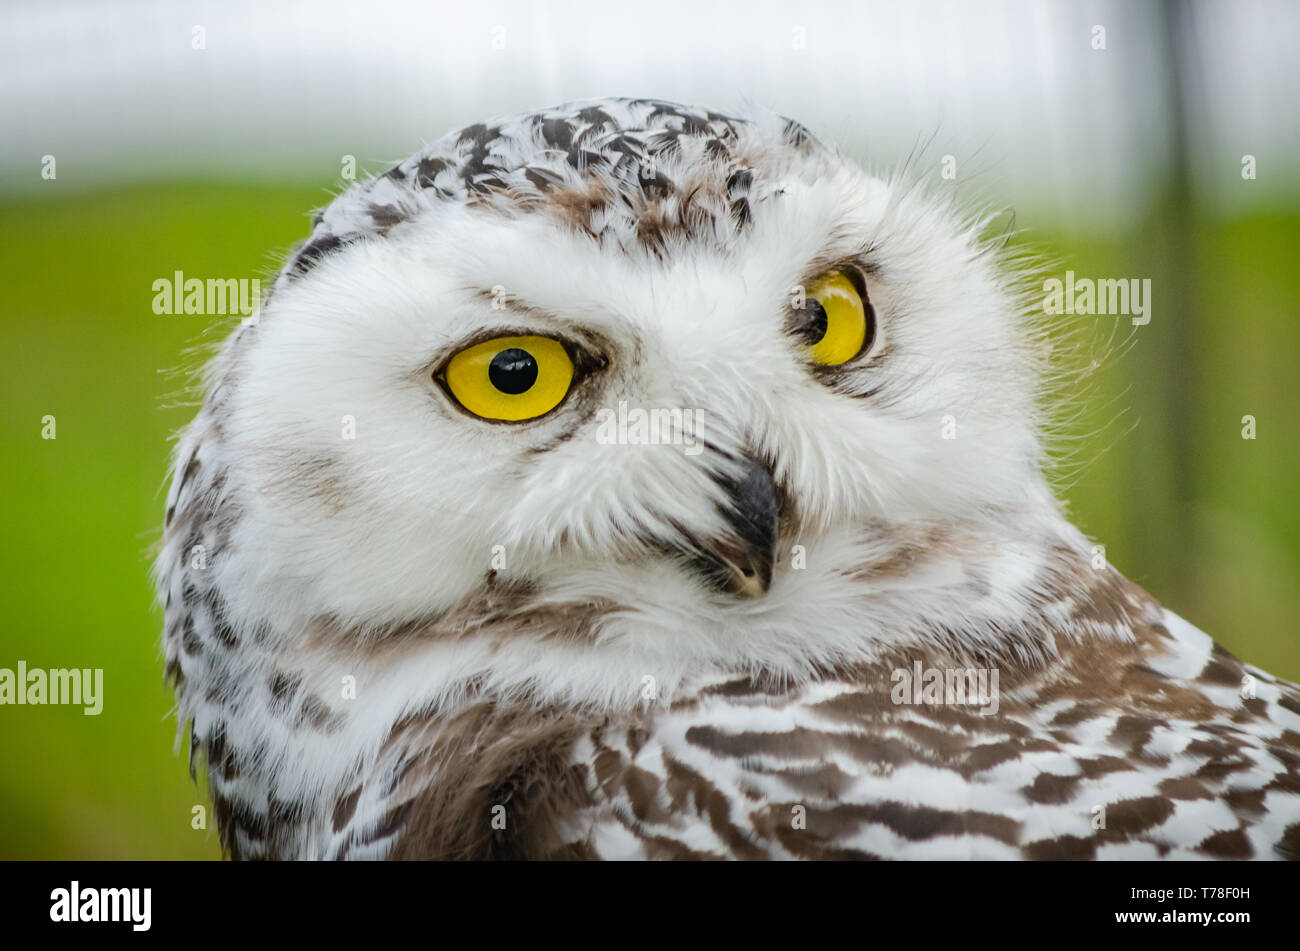 This image of a Snowy Owl (Bubo Scandiacus) was taken at Kingussie Highland Wildlife Park, Scotland.  The bird has impressive and mesmerising eyes. Stock Photo